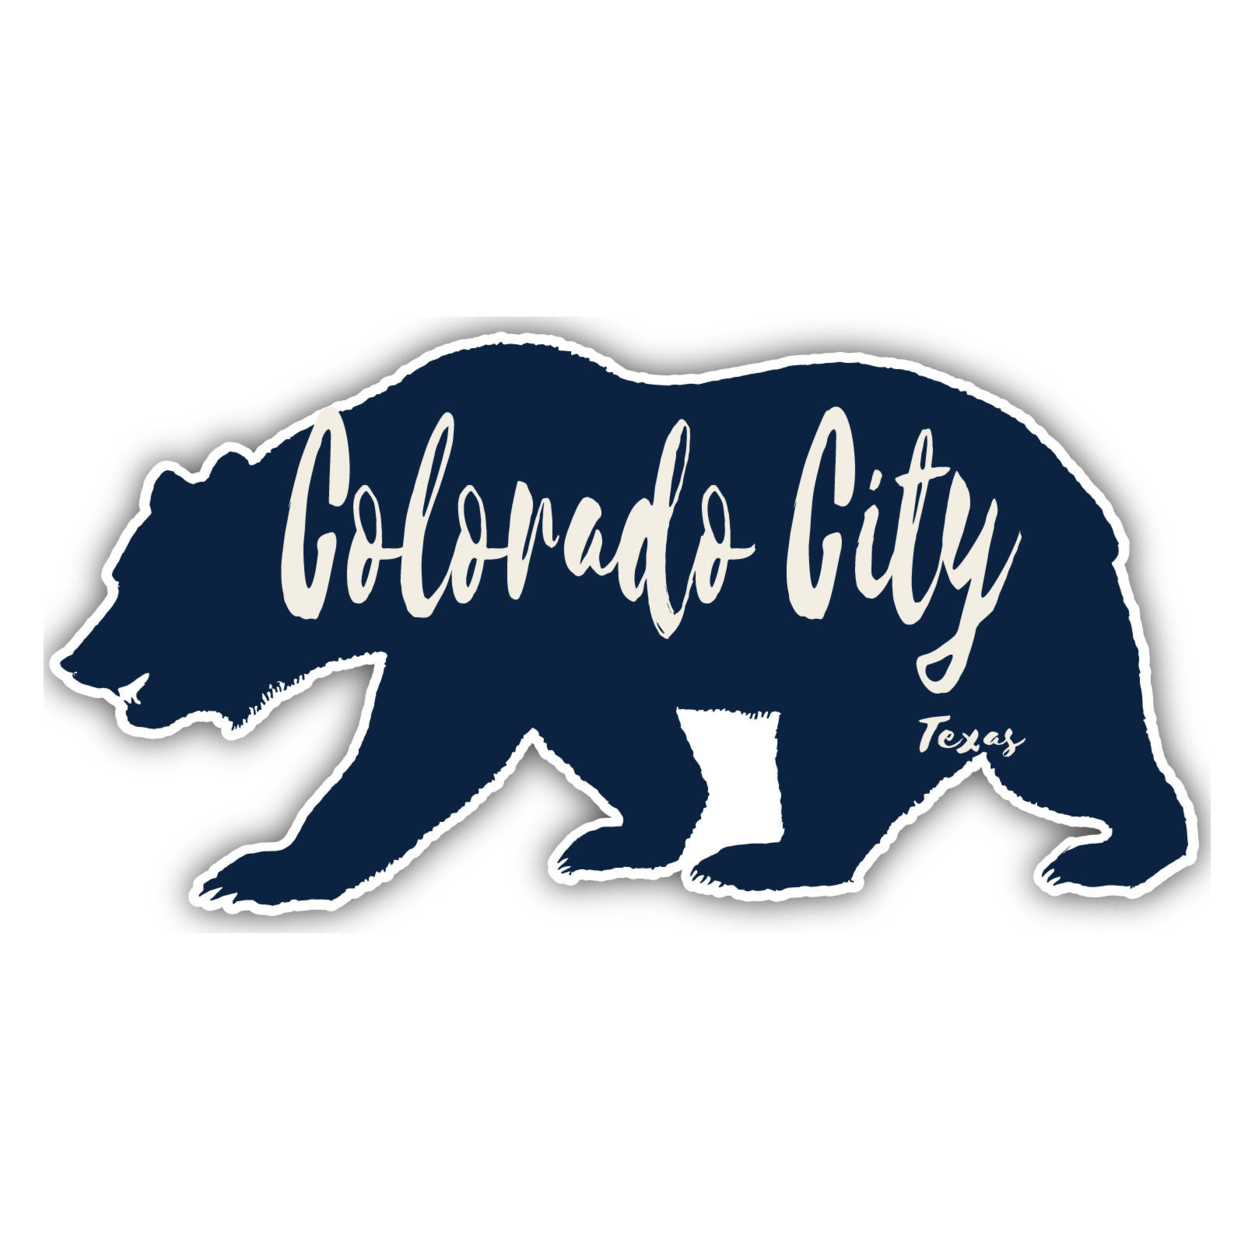 Colorado City Texas Souvenir Decorative Stickers (Choose Theme And Size) - 4-Pack, 2-Inch, Bear